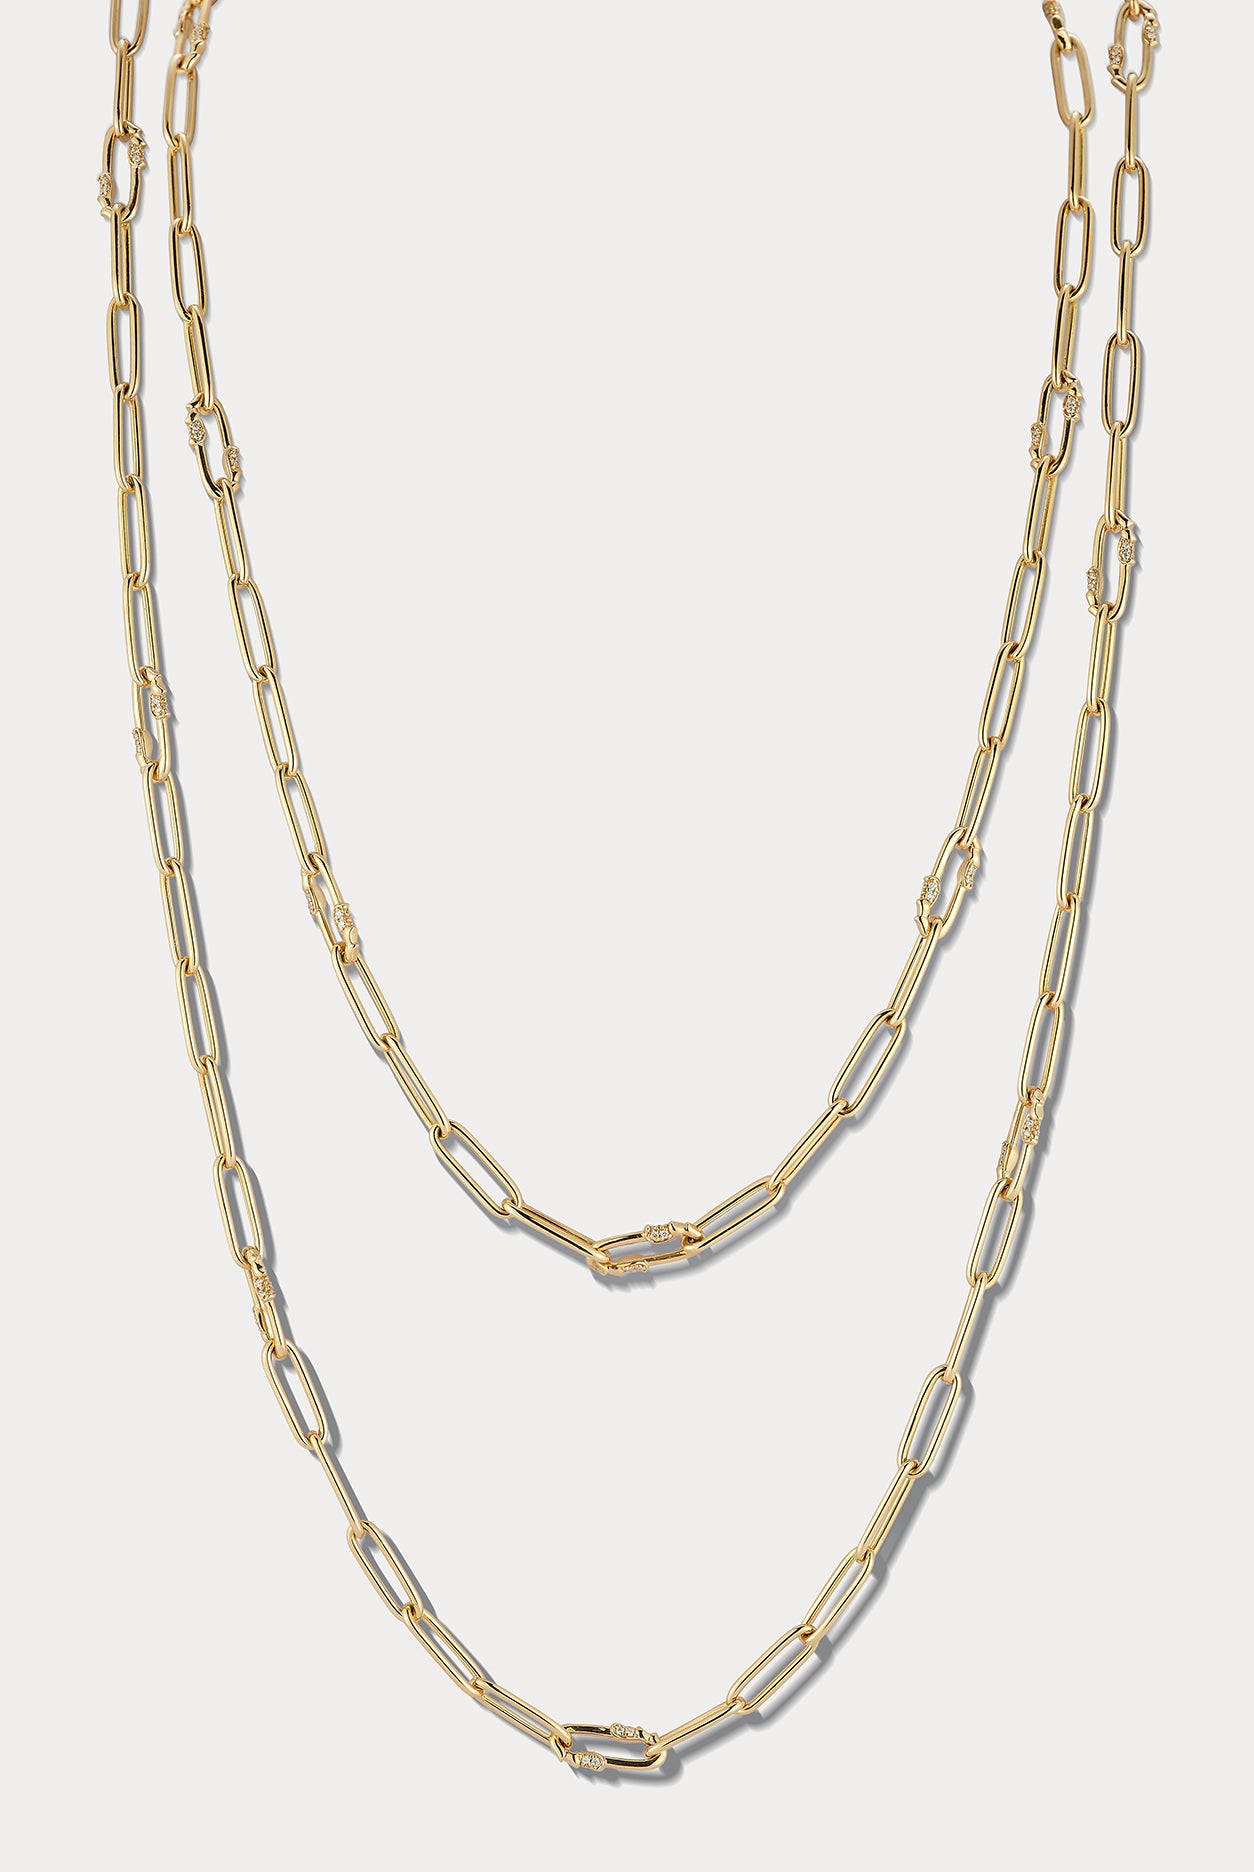 18K YG & Diamond 36 Inch Mixed Link Necklace - Ammrada